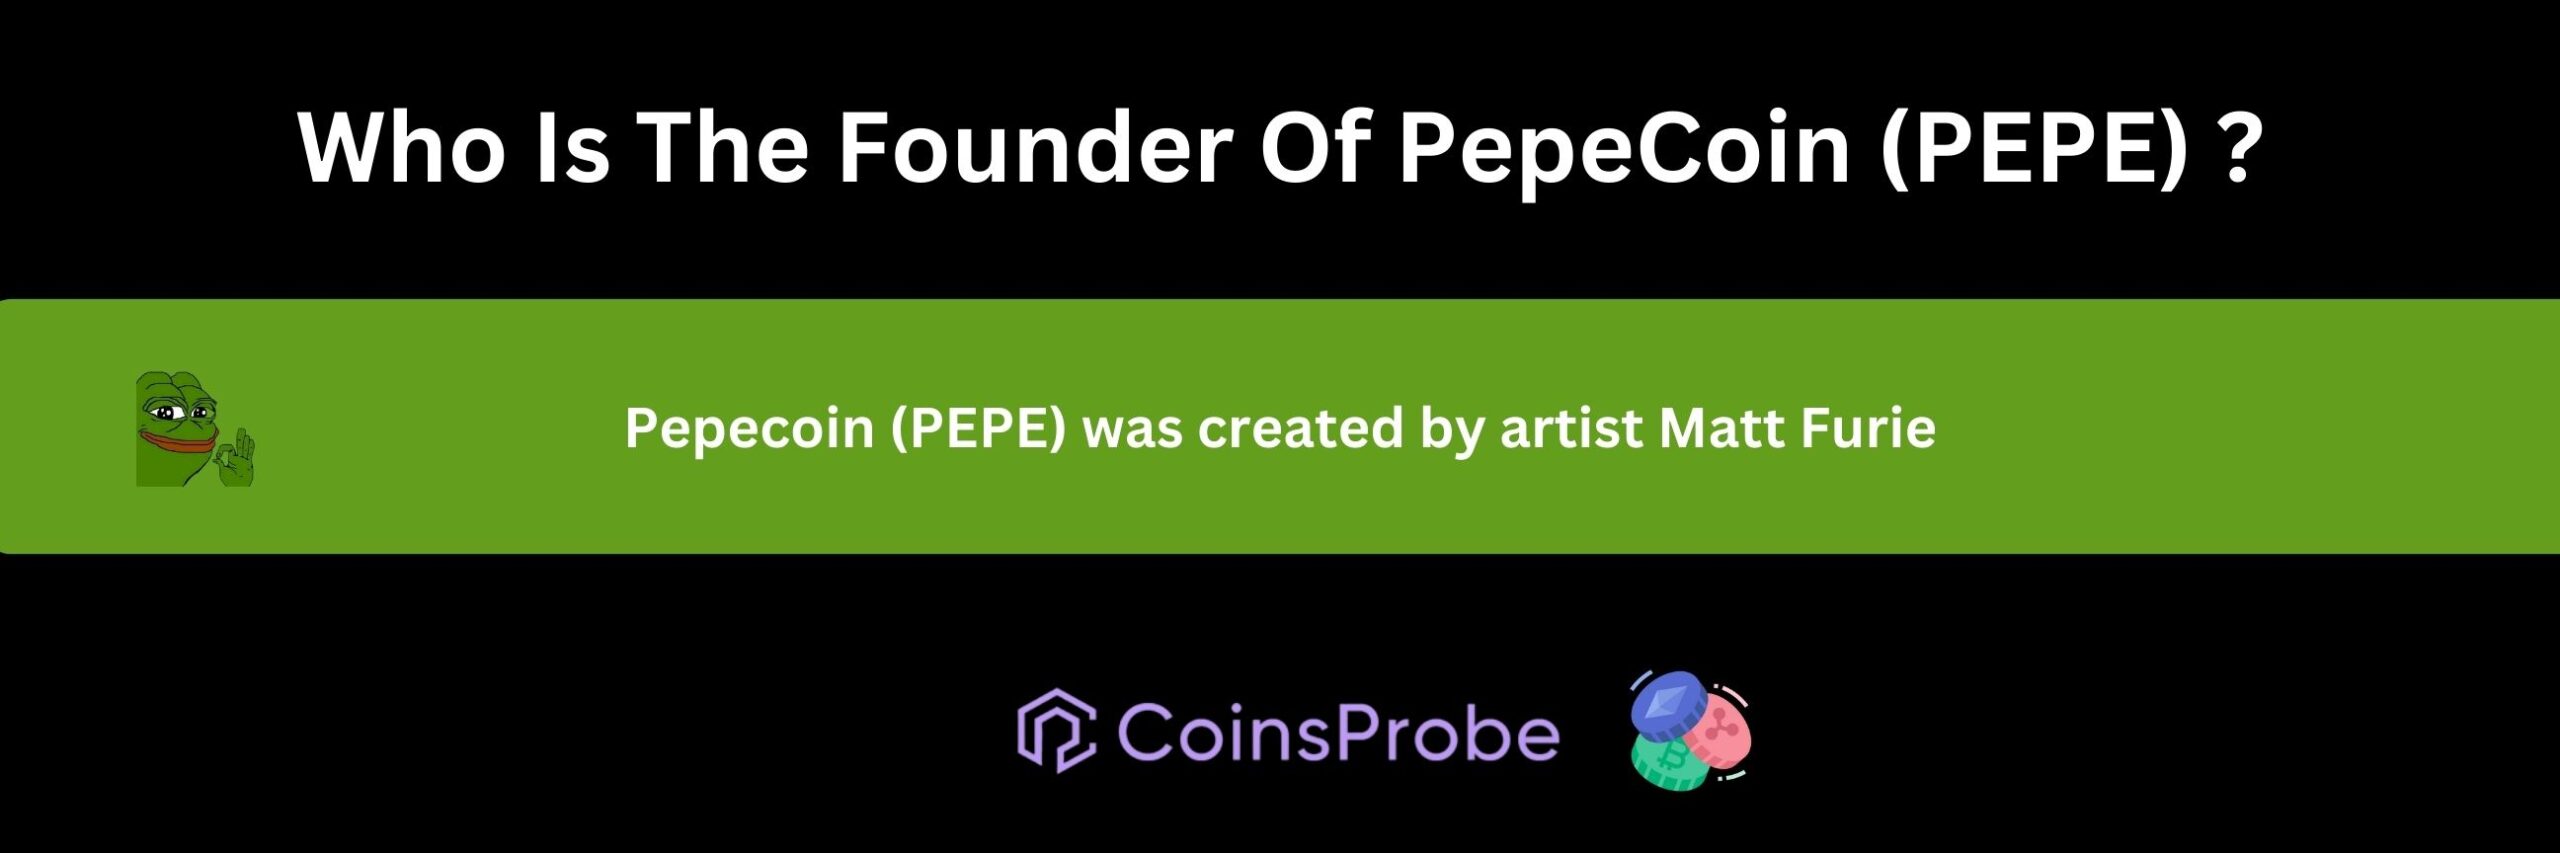 Pepecoin (PEPE) was created by artist Matt Furie